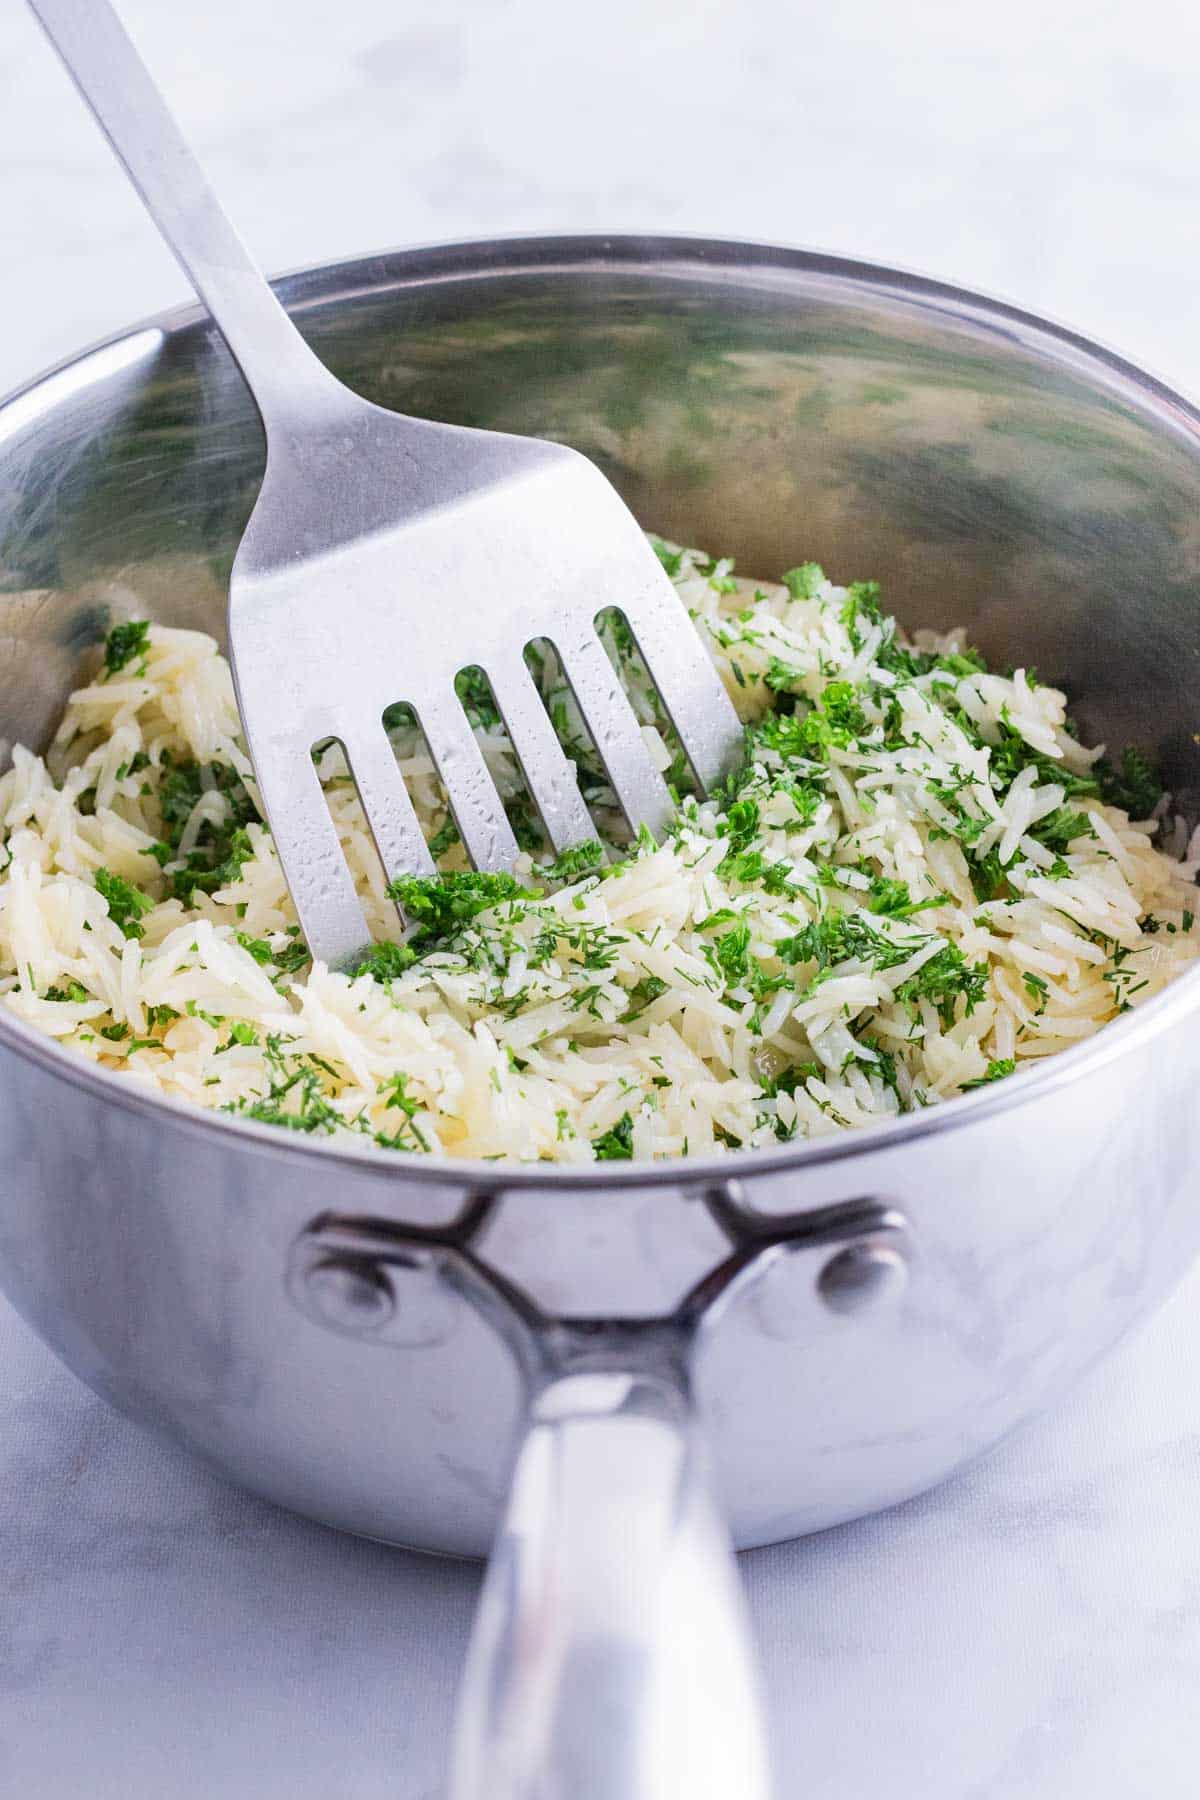 A spatula fluffs up rice after cooking.